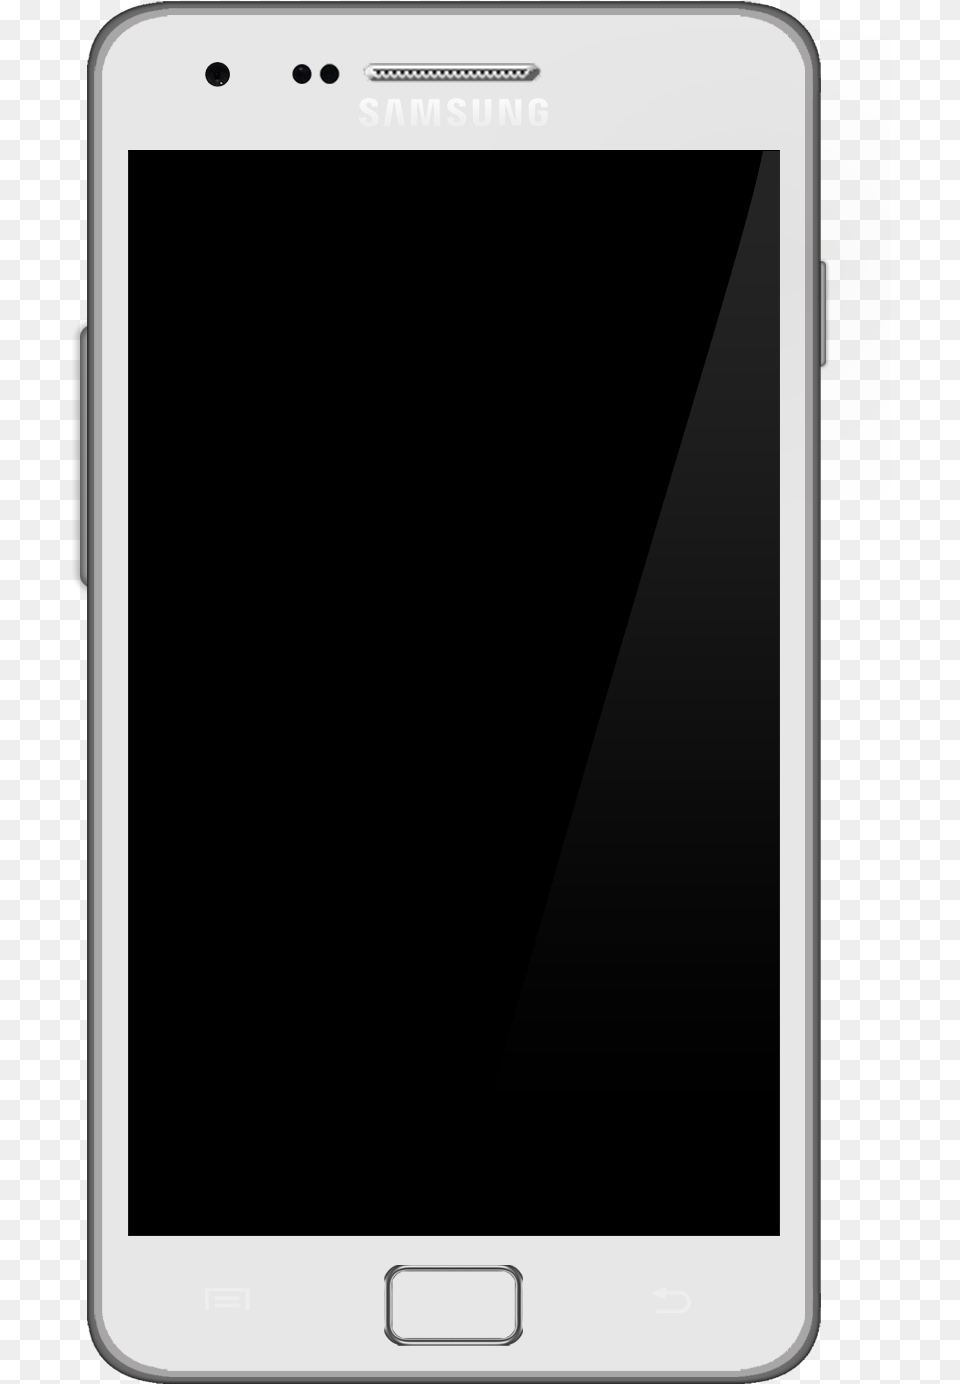 Samsung Galaxy S Ii Samsung Galaxy S2, Electronics, Mobile Phone, Phone Png Image